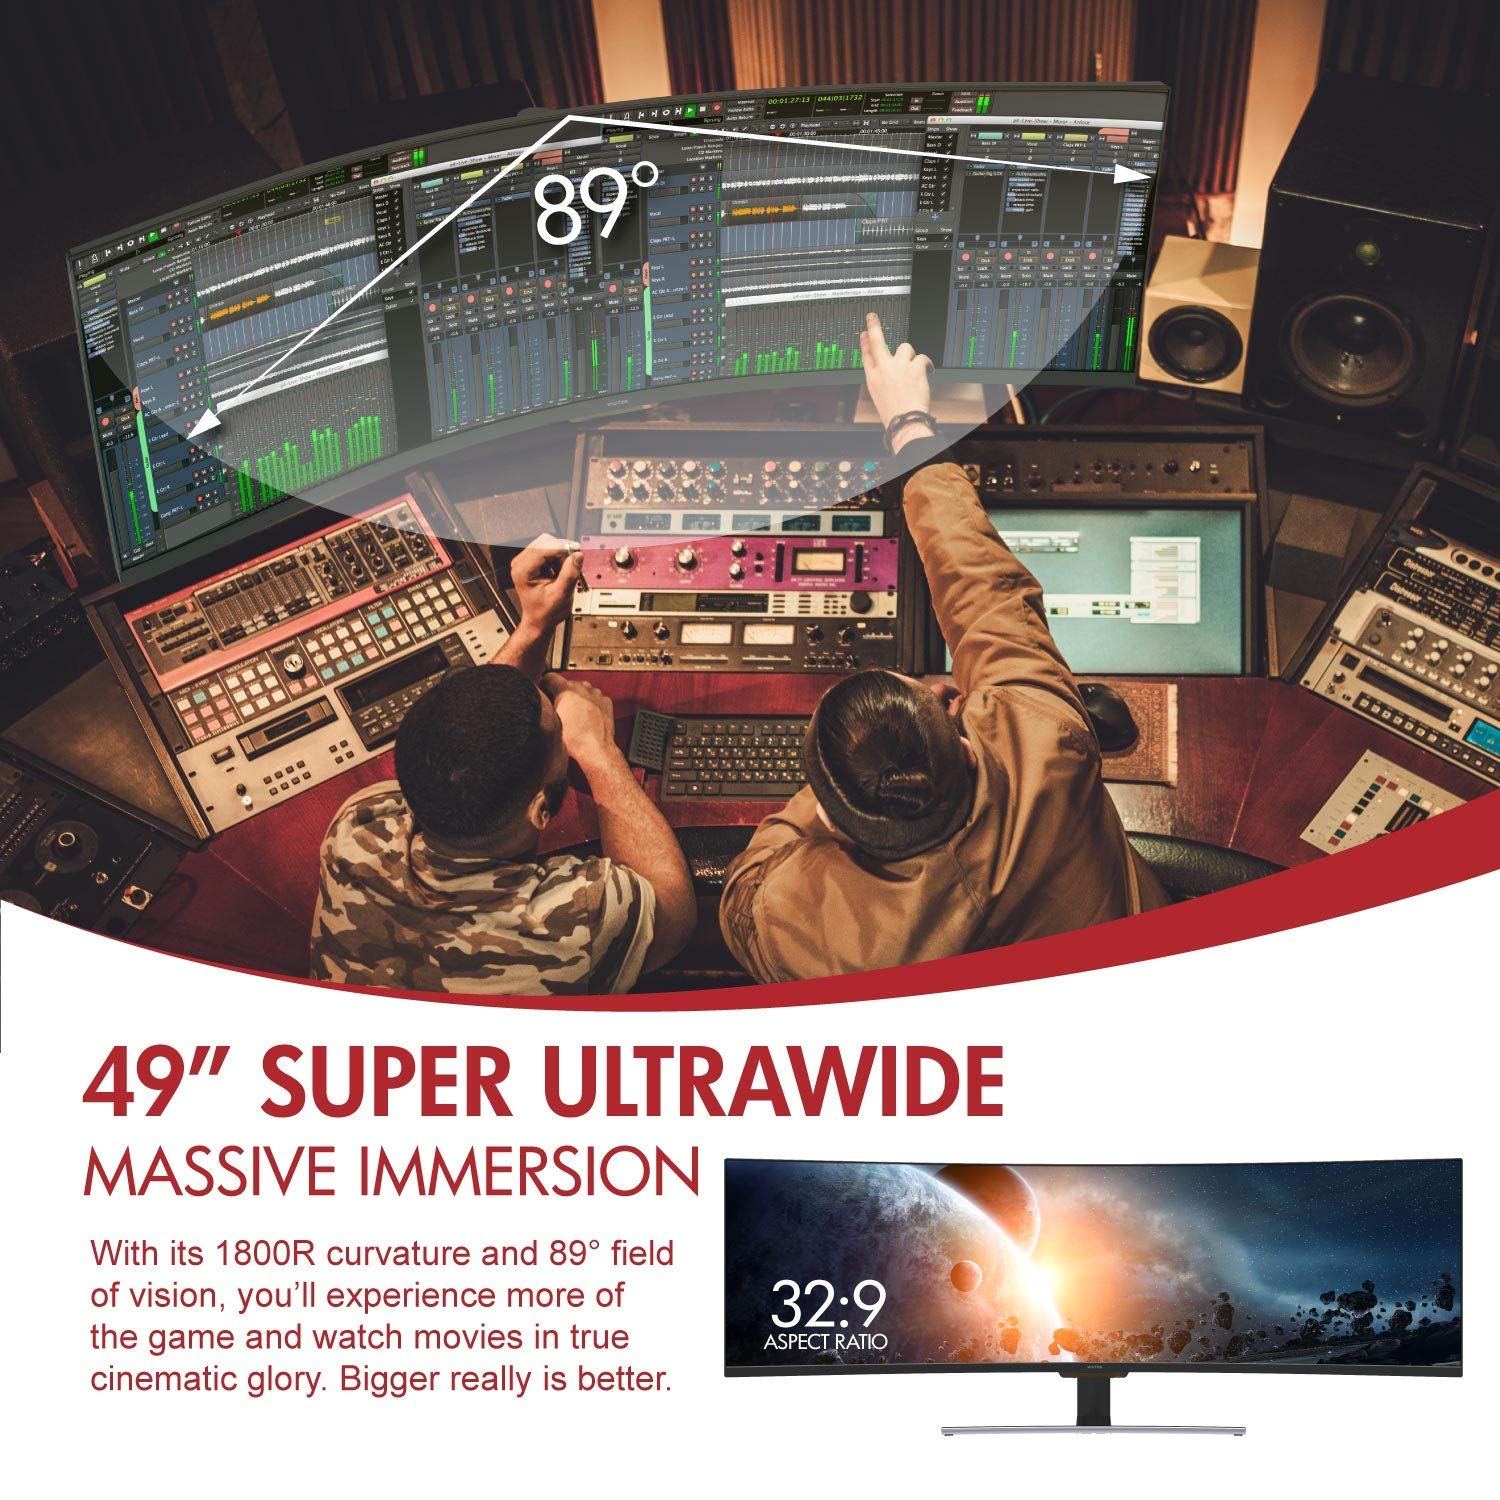 Viotek SUW49C 49-Inch Super Ultrawide 32:9 Curved Monitor with Speakers, 144Hz HDR 6ms 3840x1080p, FreeSync, GamePlus, VESA & More